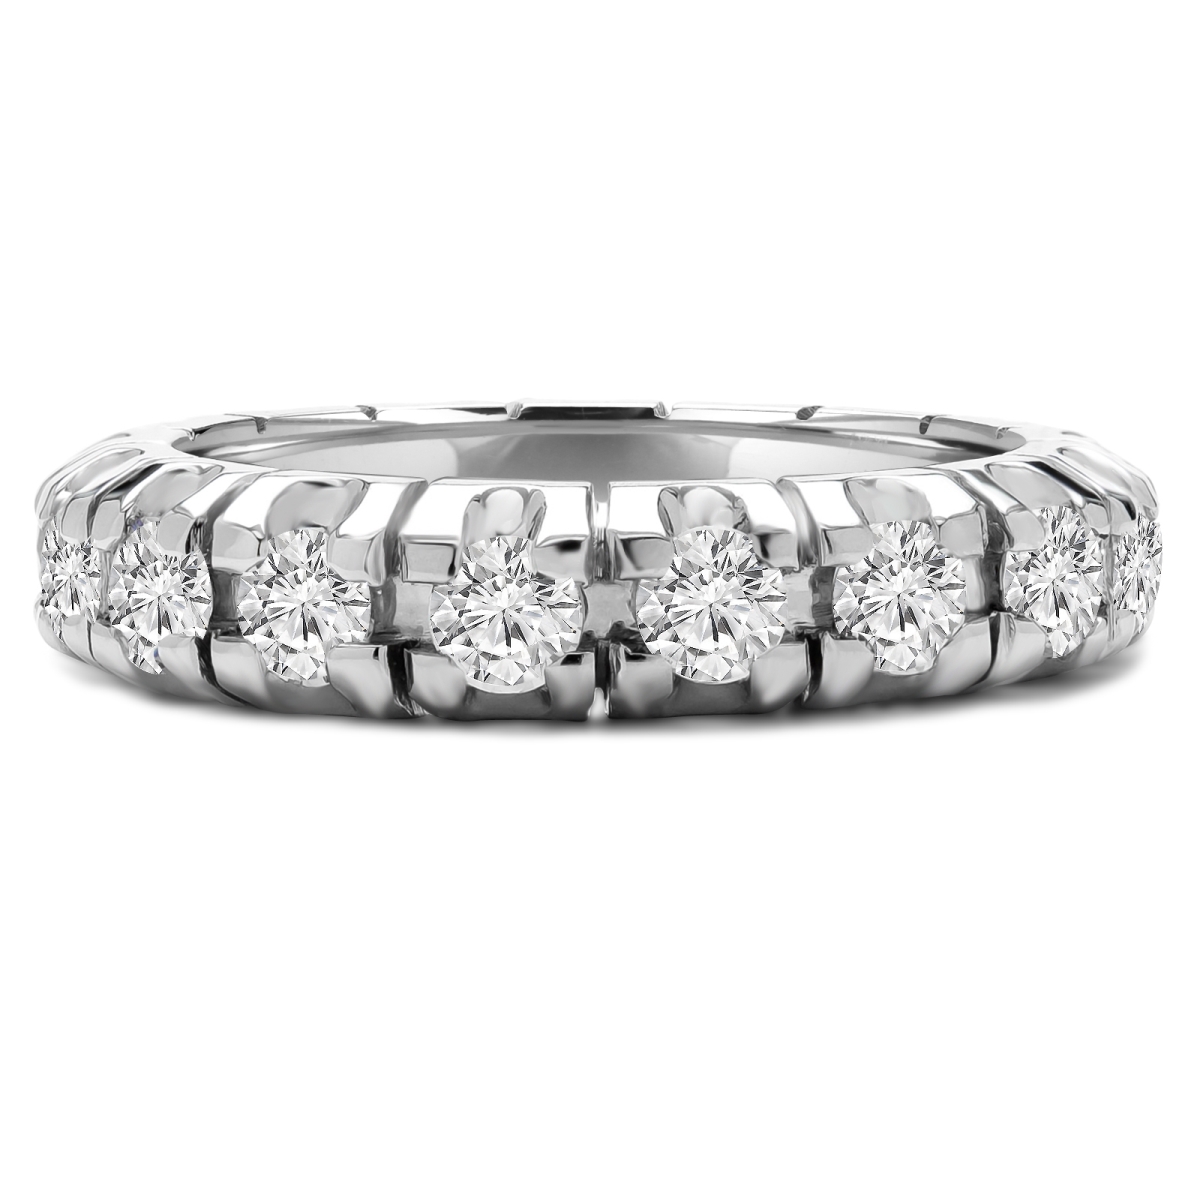 Majesty Diamonds MD210319-8.5 3.33 CTW Round Diamond Full-Eternity Anniversary Wedding Band Ring in 18K White Gold - Size 8.5